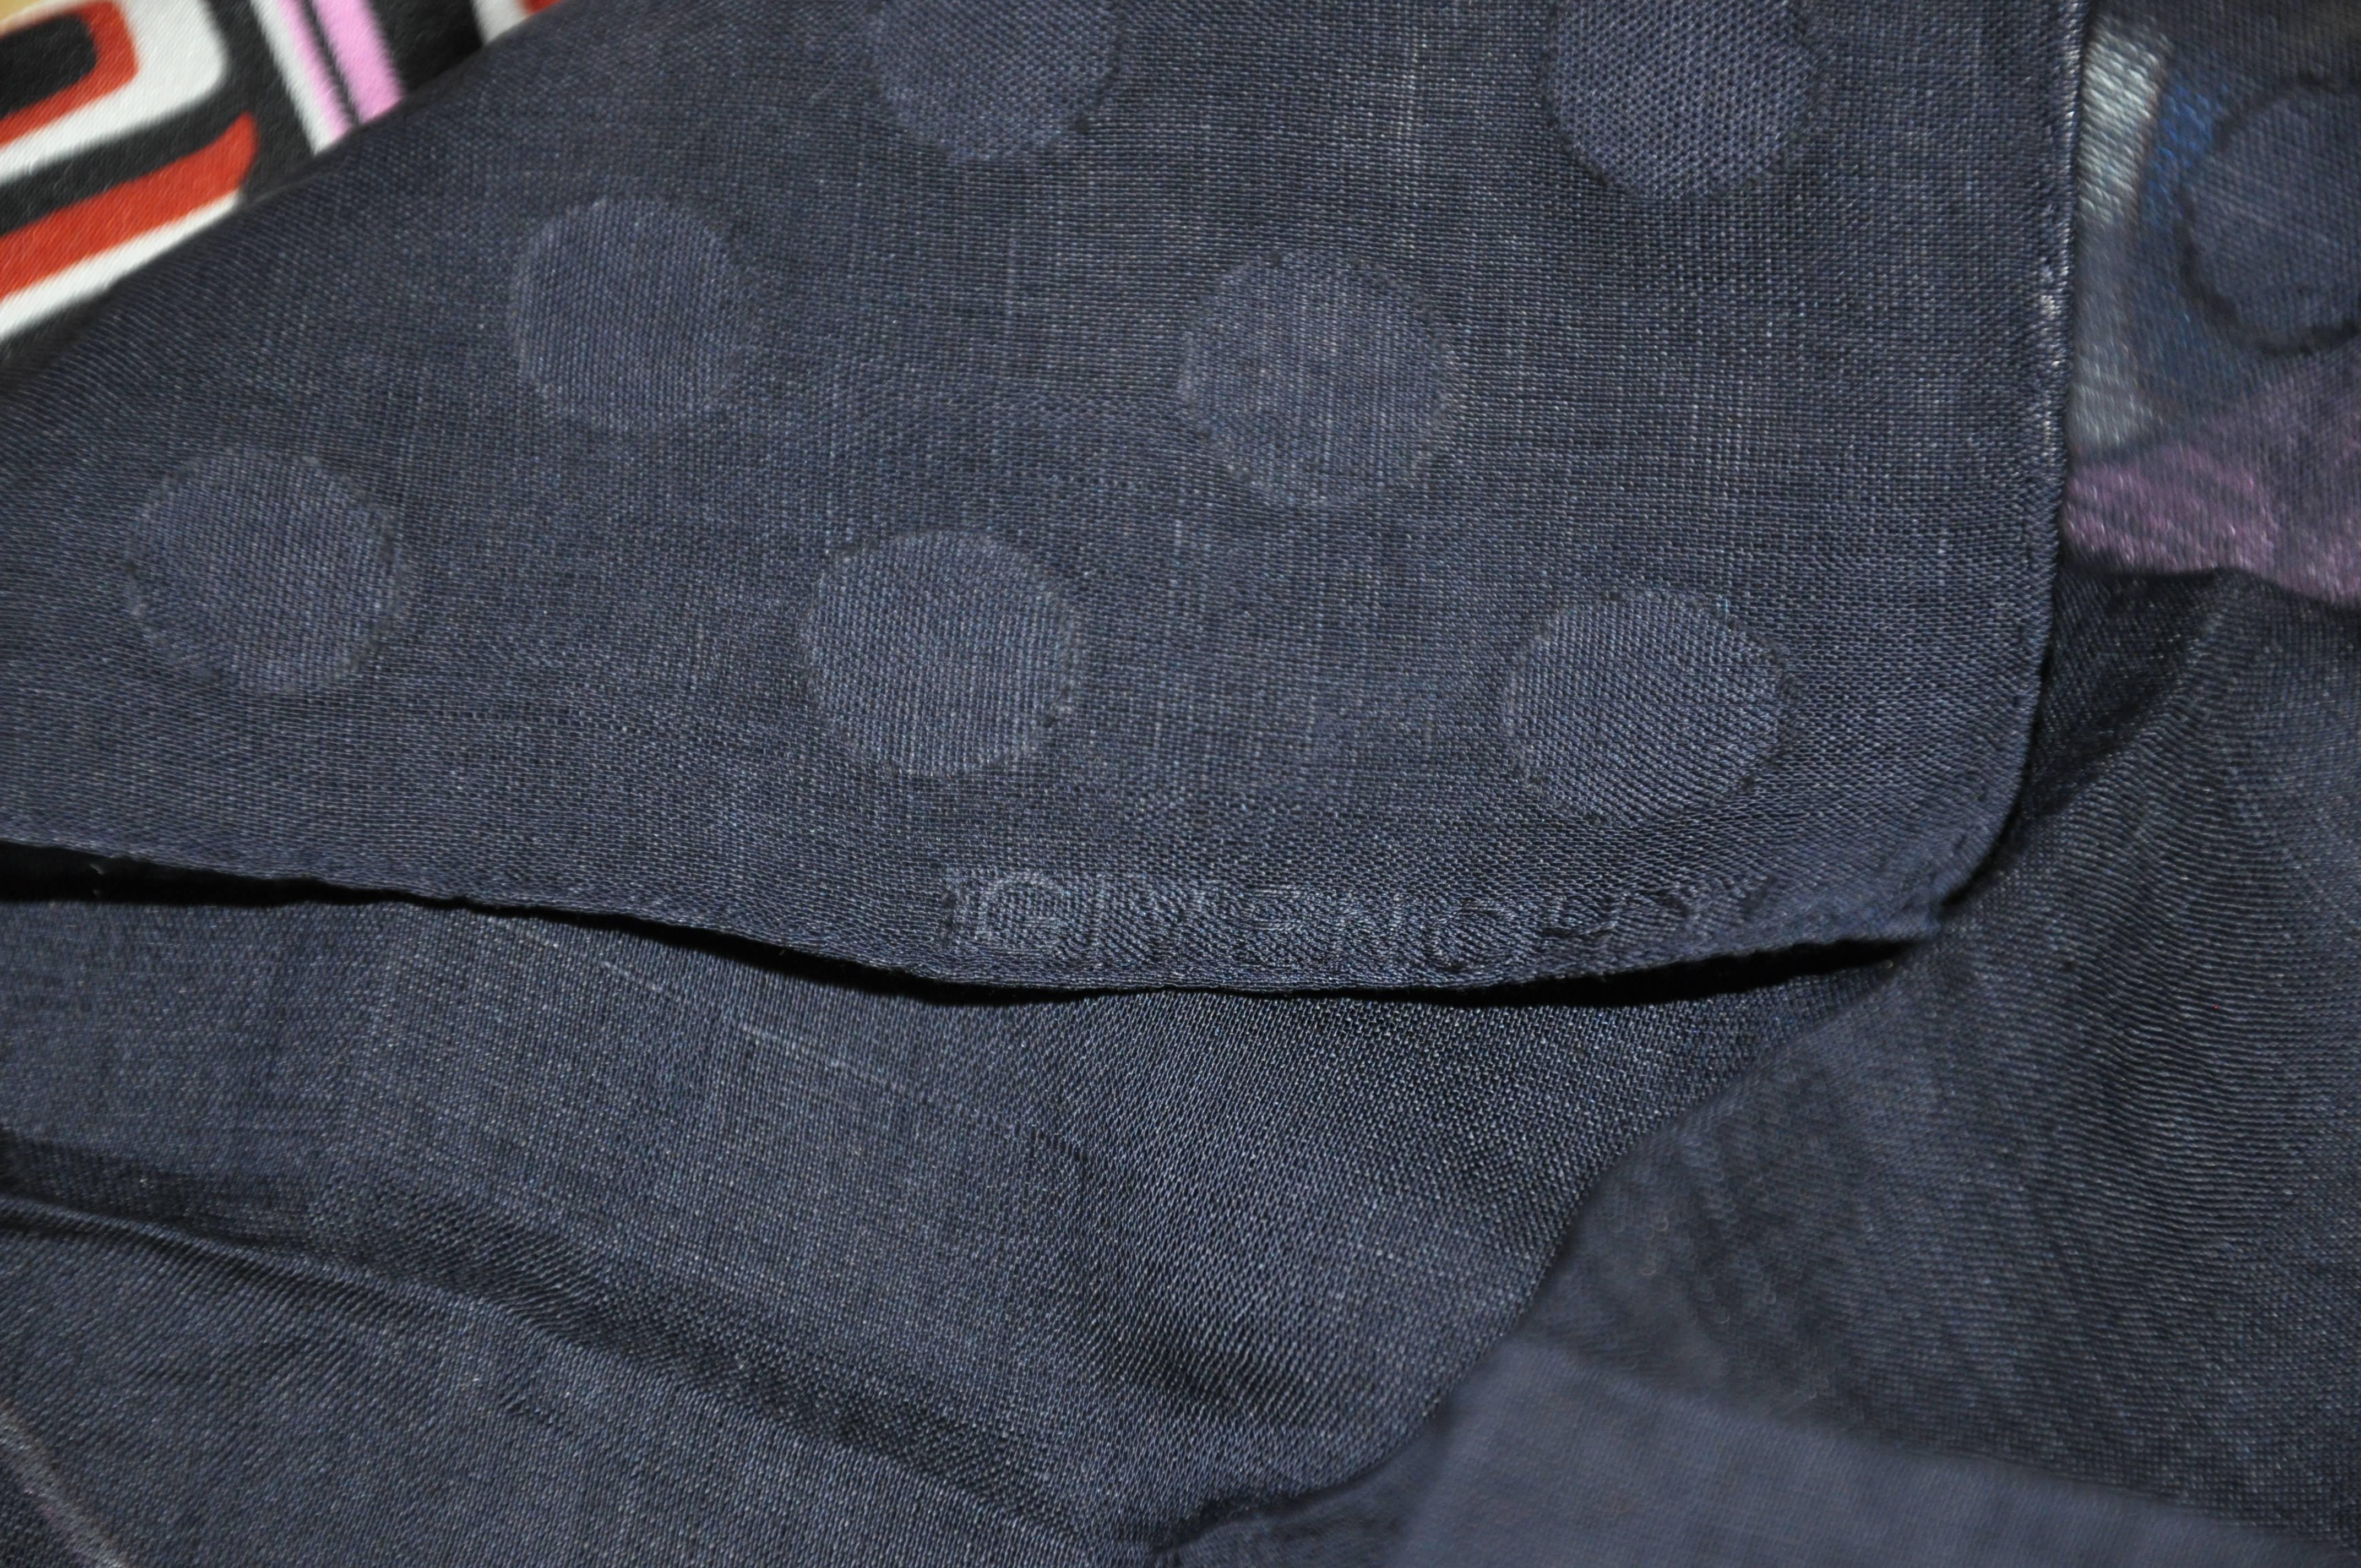       Givenchy's wonderful detailed set of linen dark navy polka-dot men's handkerchiefs which measures 12